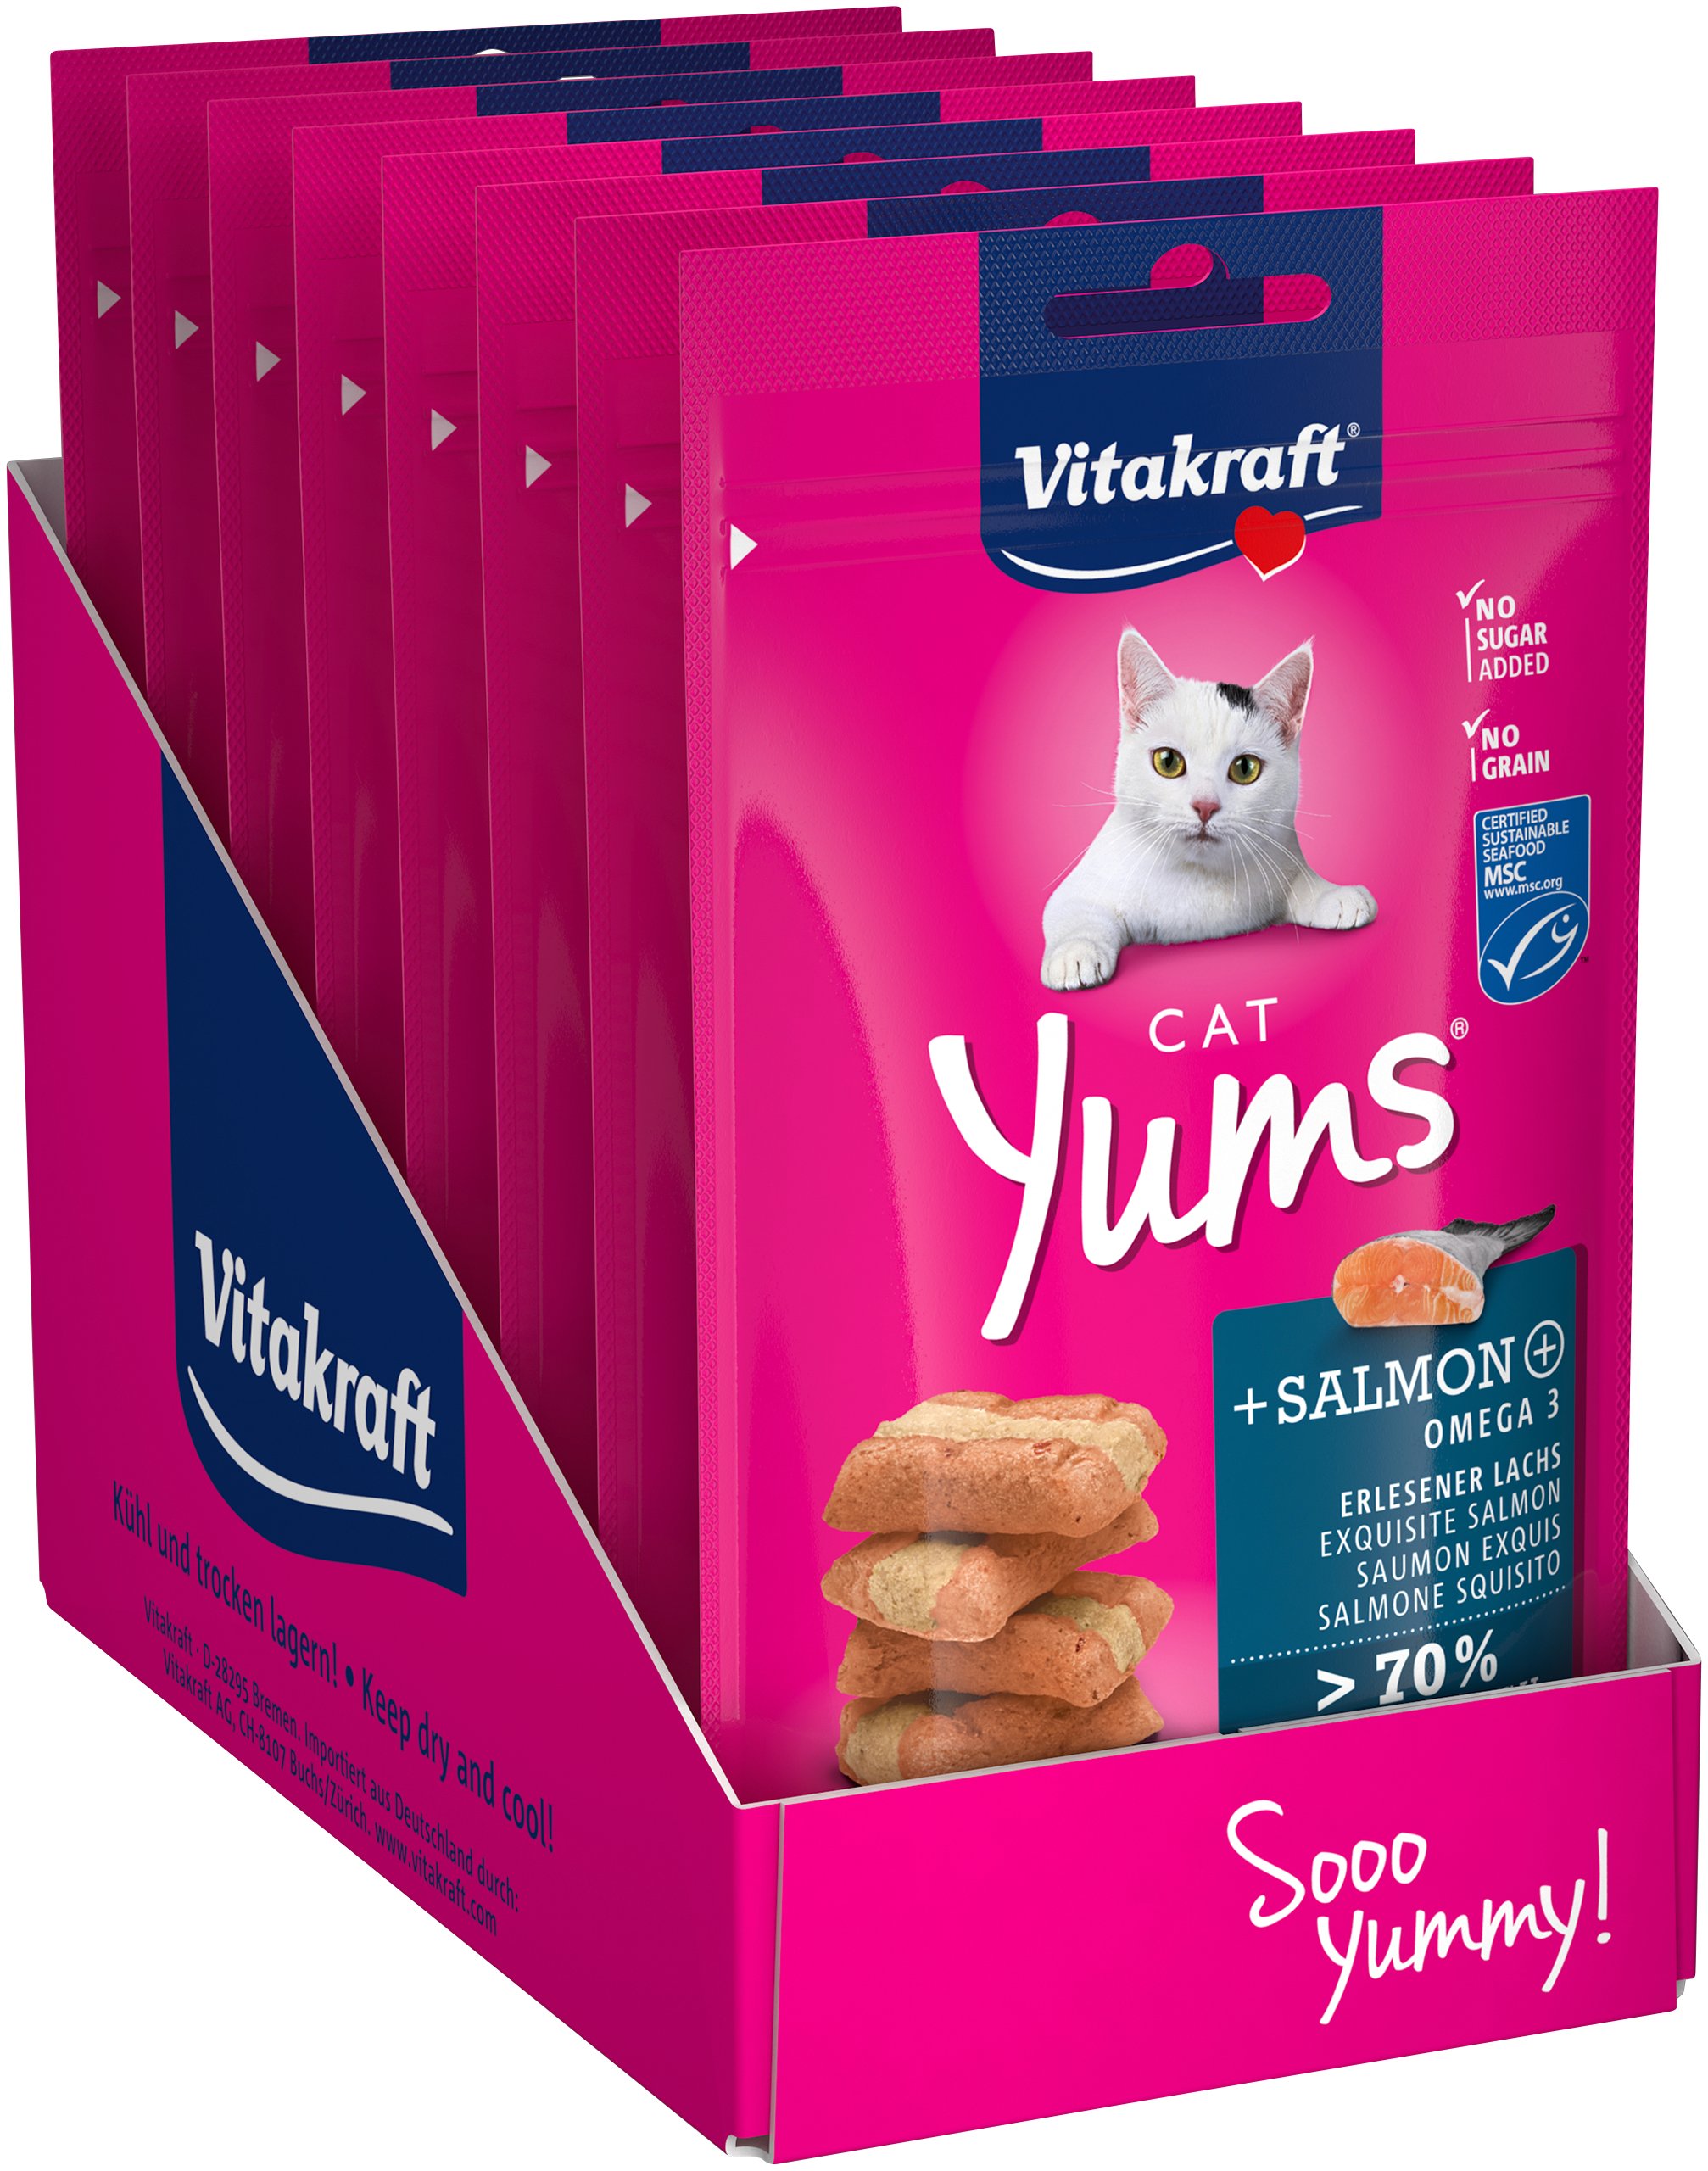 Vitakraft - Cat treats - 9 x Cat Yums salmon MSC 40g - (bundle) - Kjæledyr og utstyr